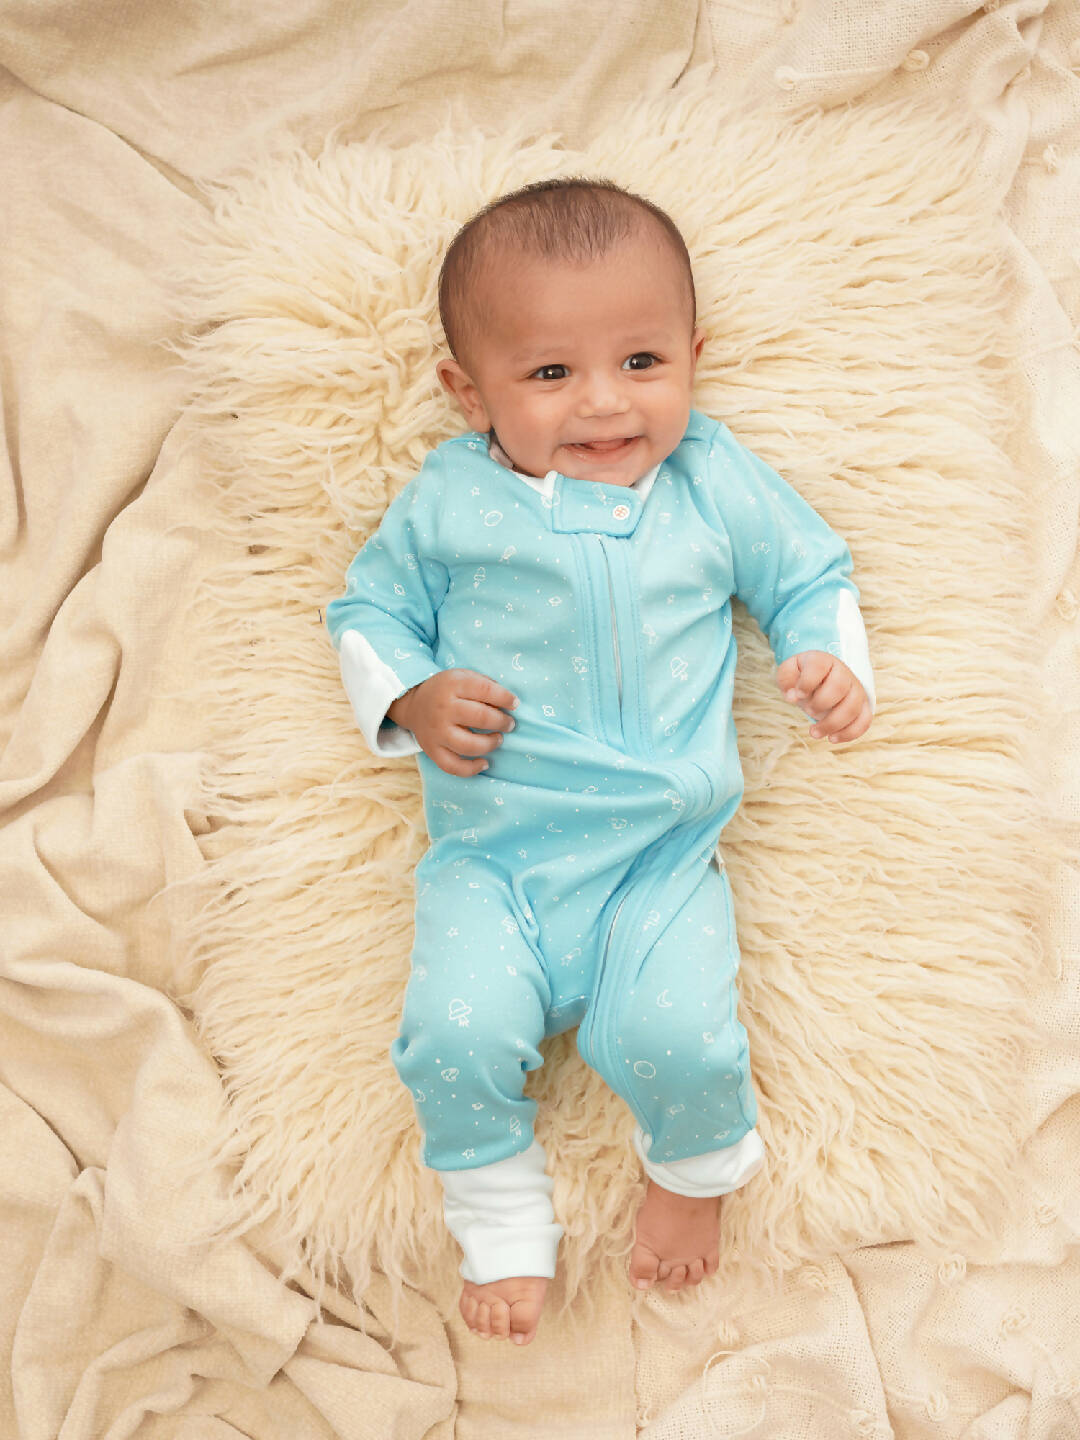 Greendigo Organic Cotton Unisex Blue Sleepsuit Rompers for Baby